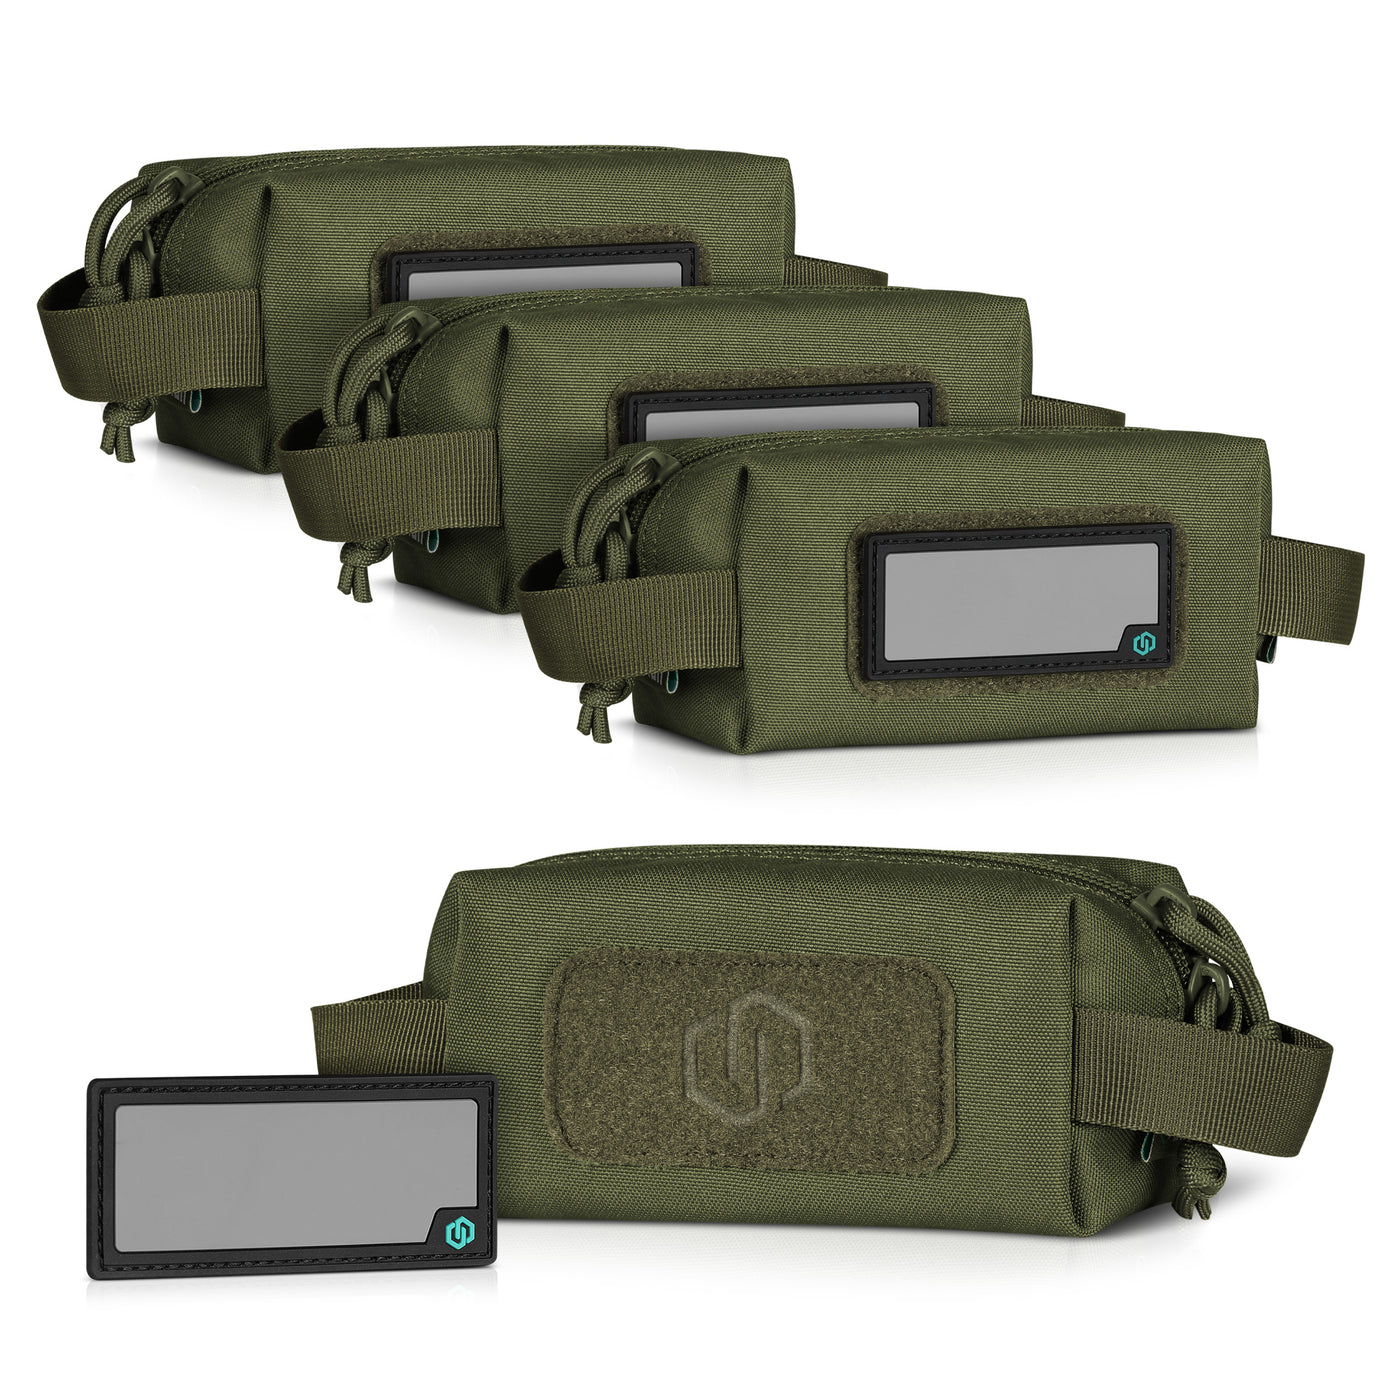 Loose Sac - Ammo Bag Small - Green - 4-Pack